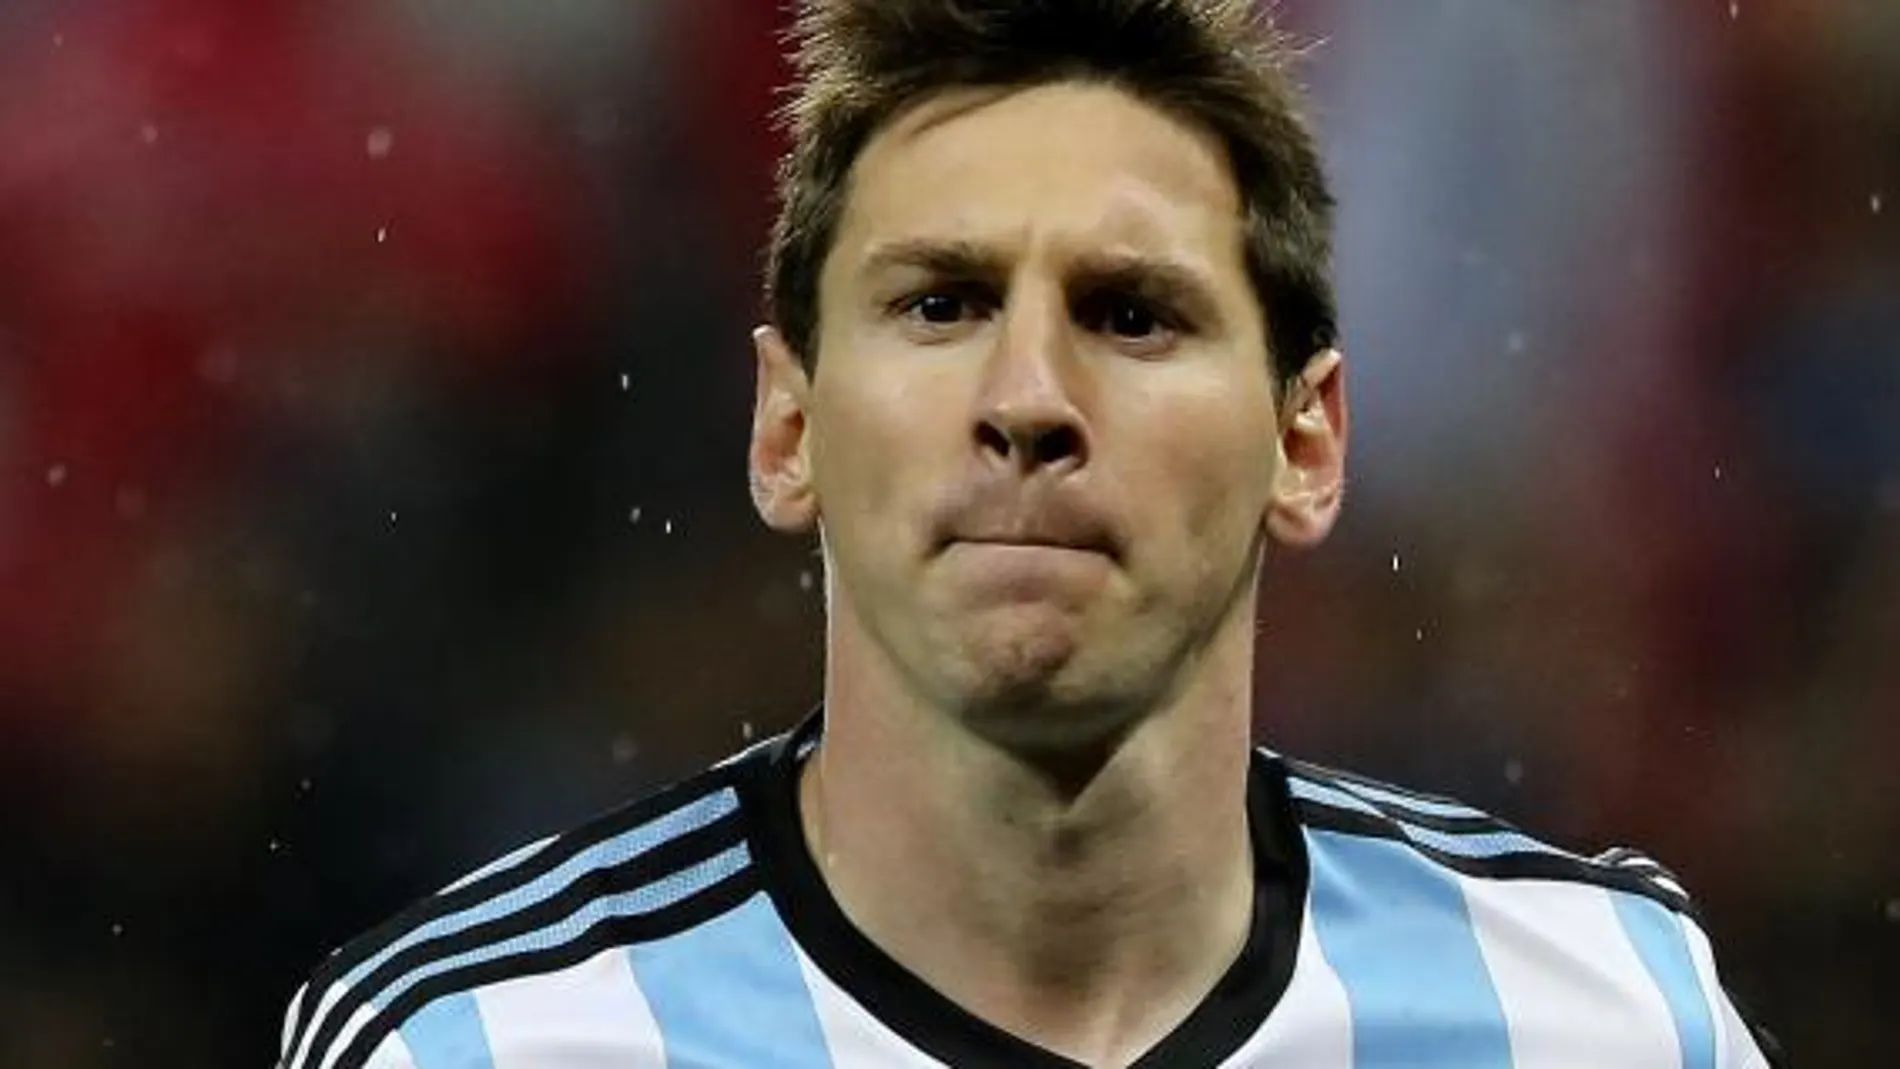 El delantero argentino Lionel Messi